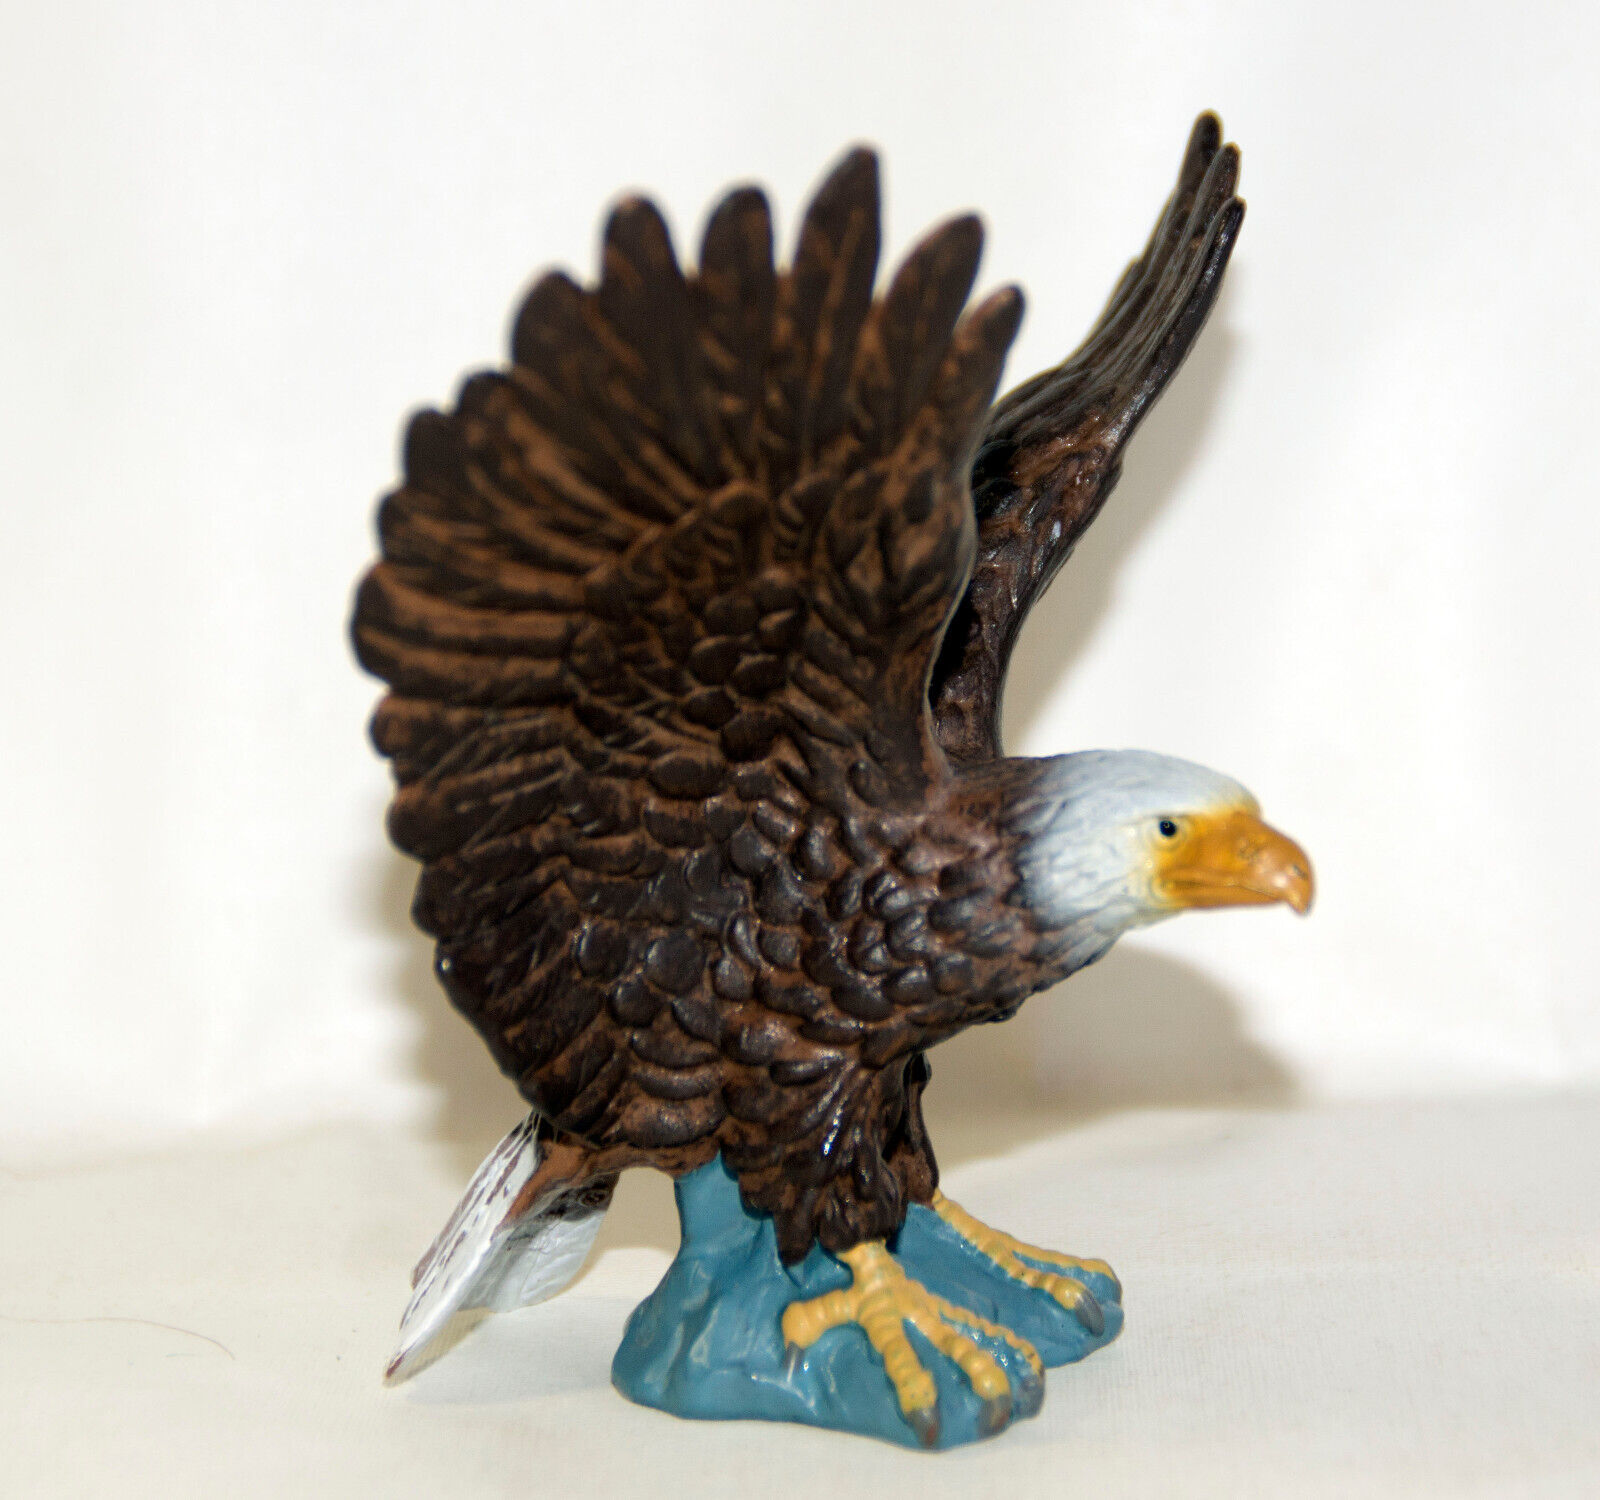 Bald Eagle Schleich 3” Figure Spread Wings 16707 Retired Germany 2001 Vintage